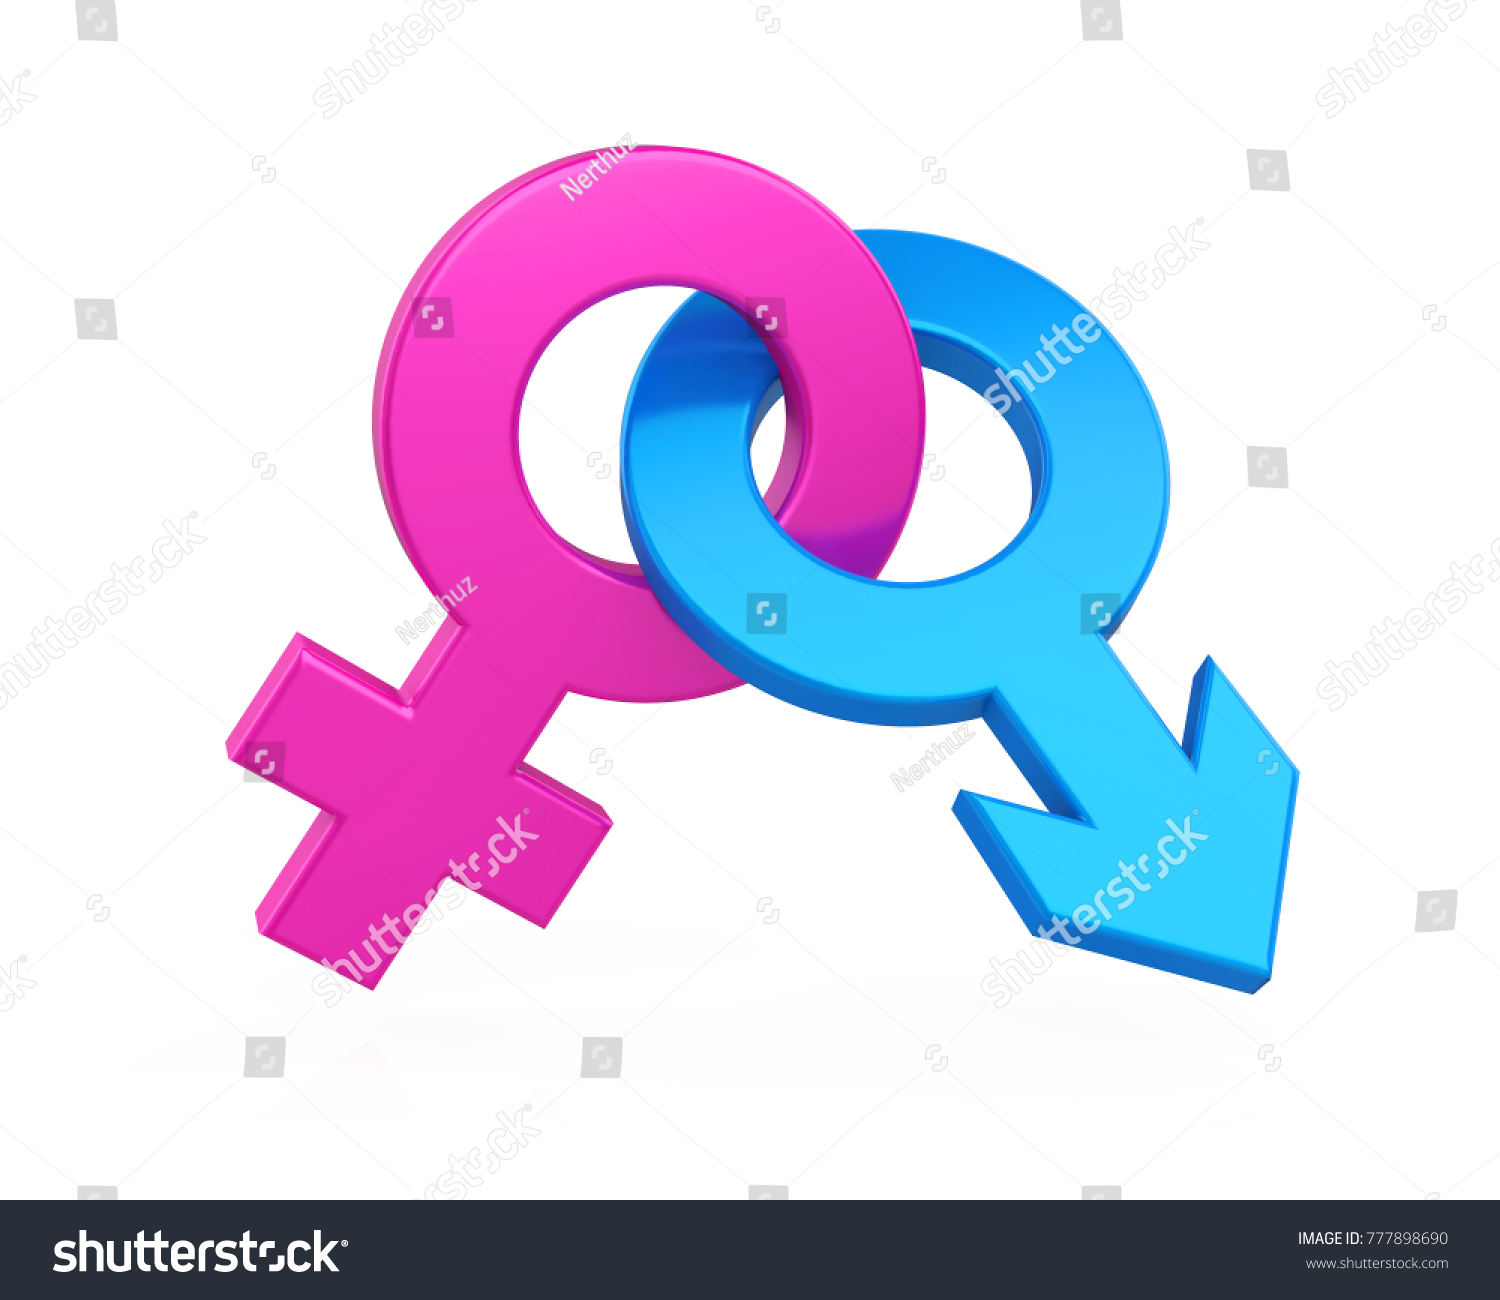 Female Male Gender Symbol Isolated 3d Stock Illustration 777898690 6932